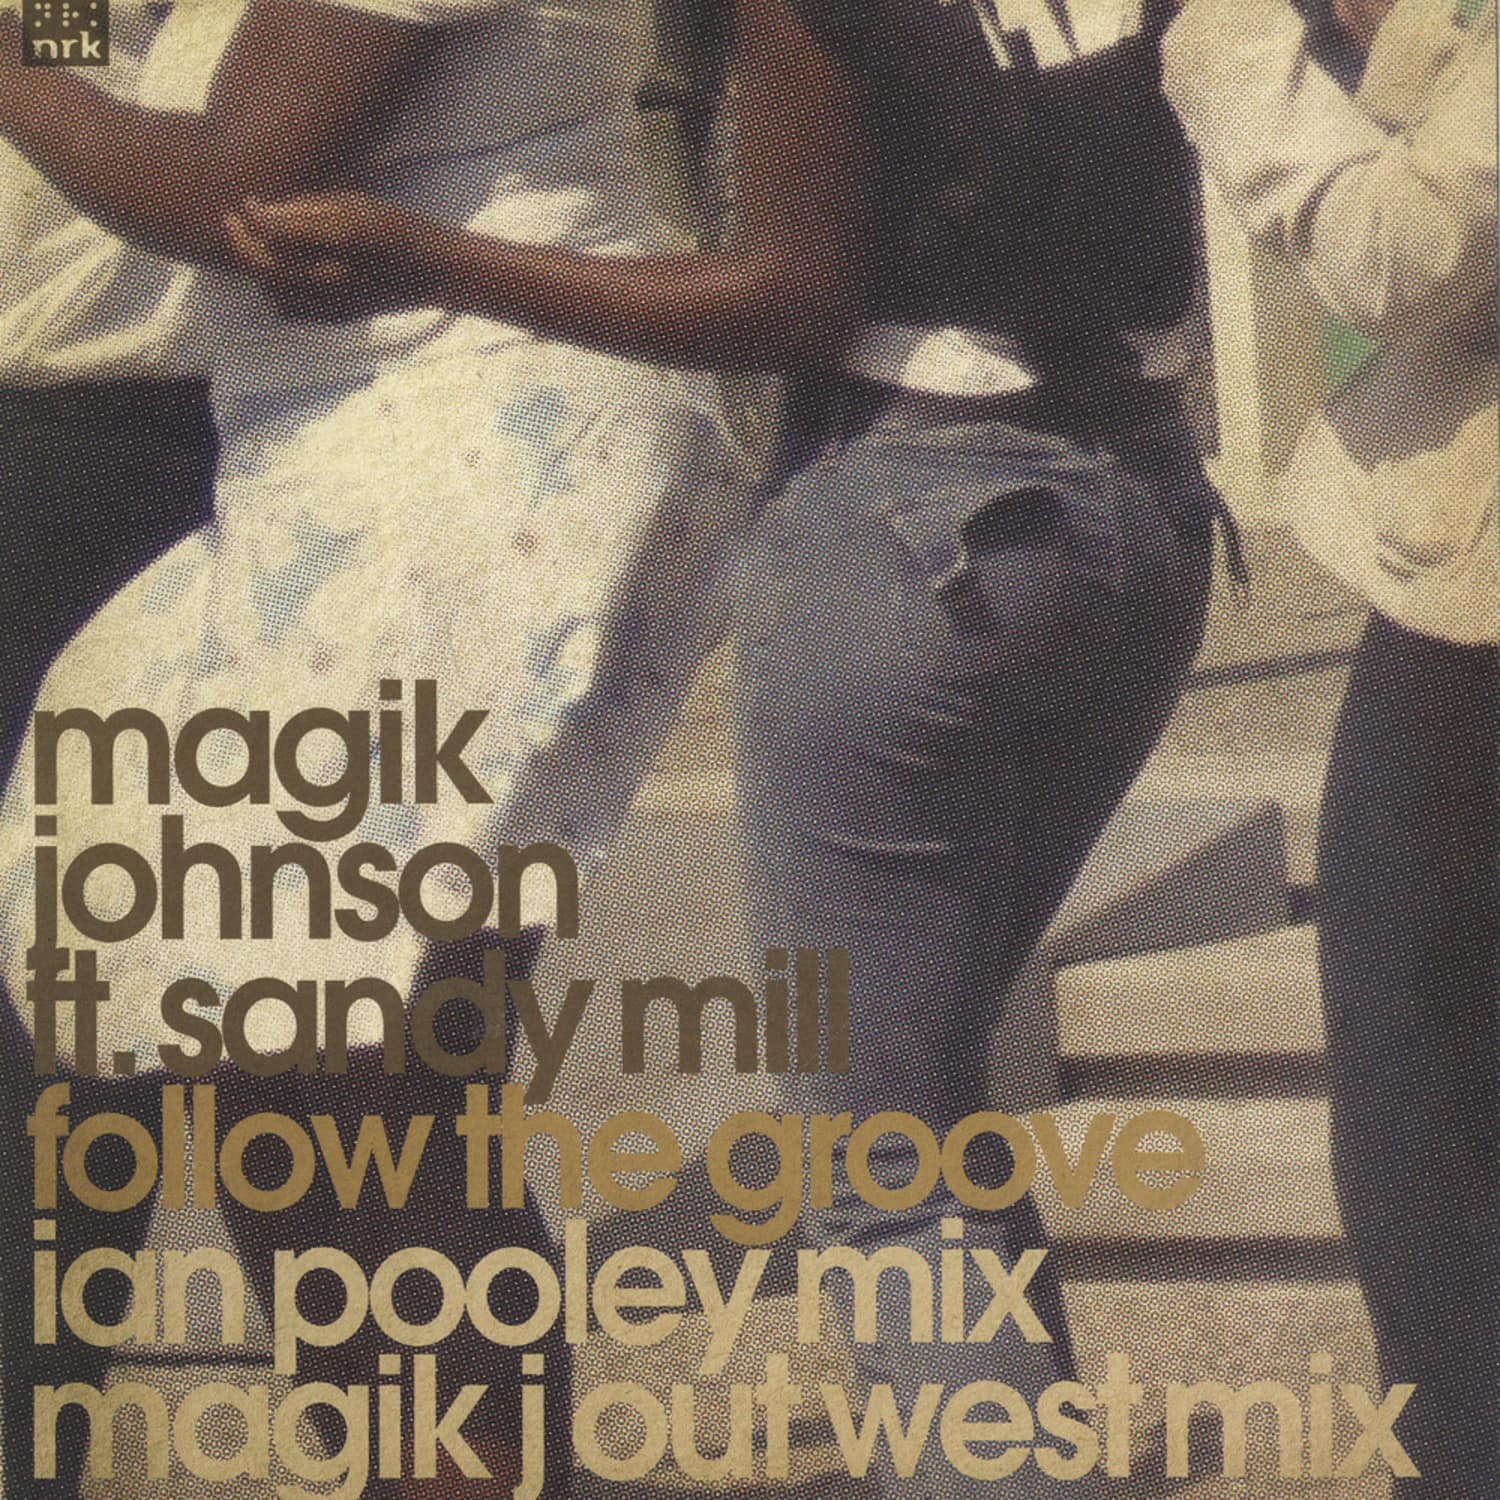 Magik Johnson ft. Sandy Mill - FOLLOW THE GROOVE